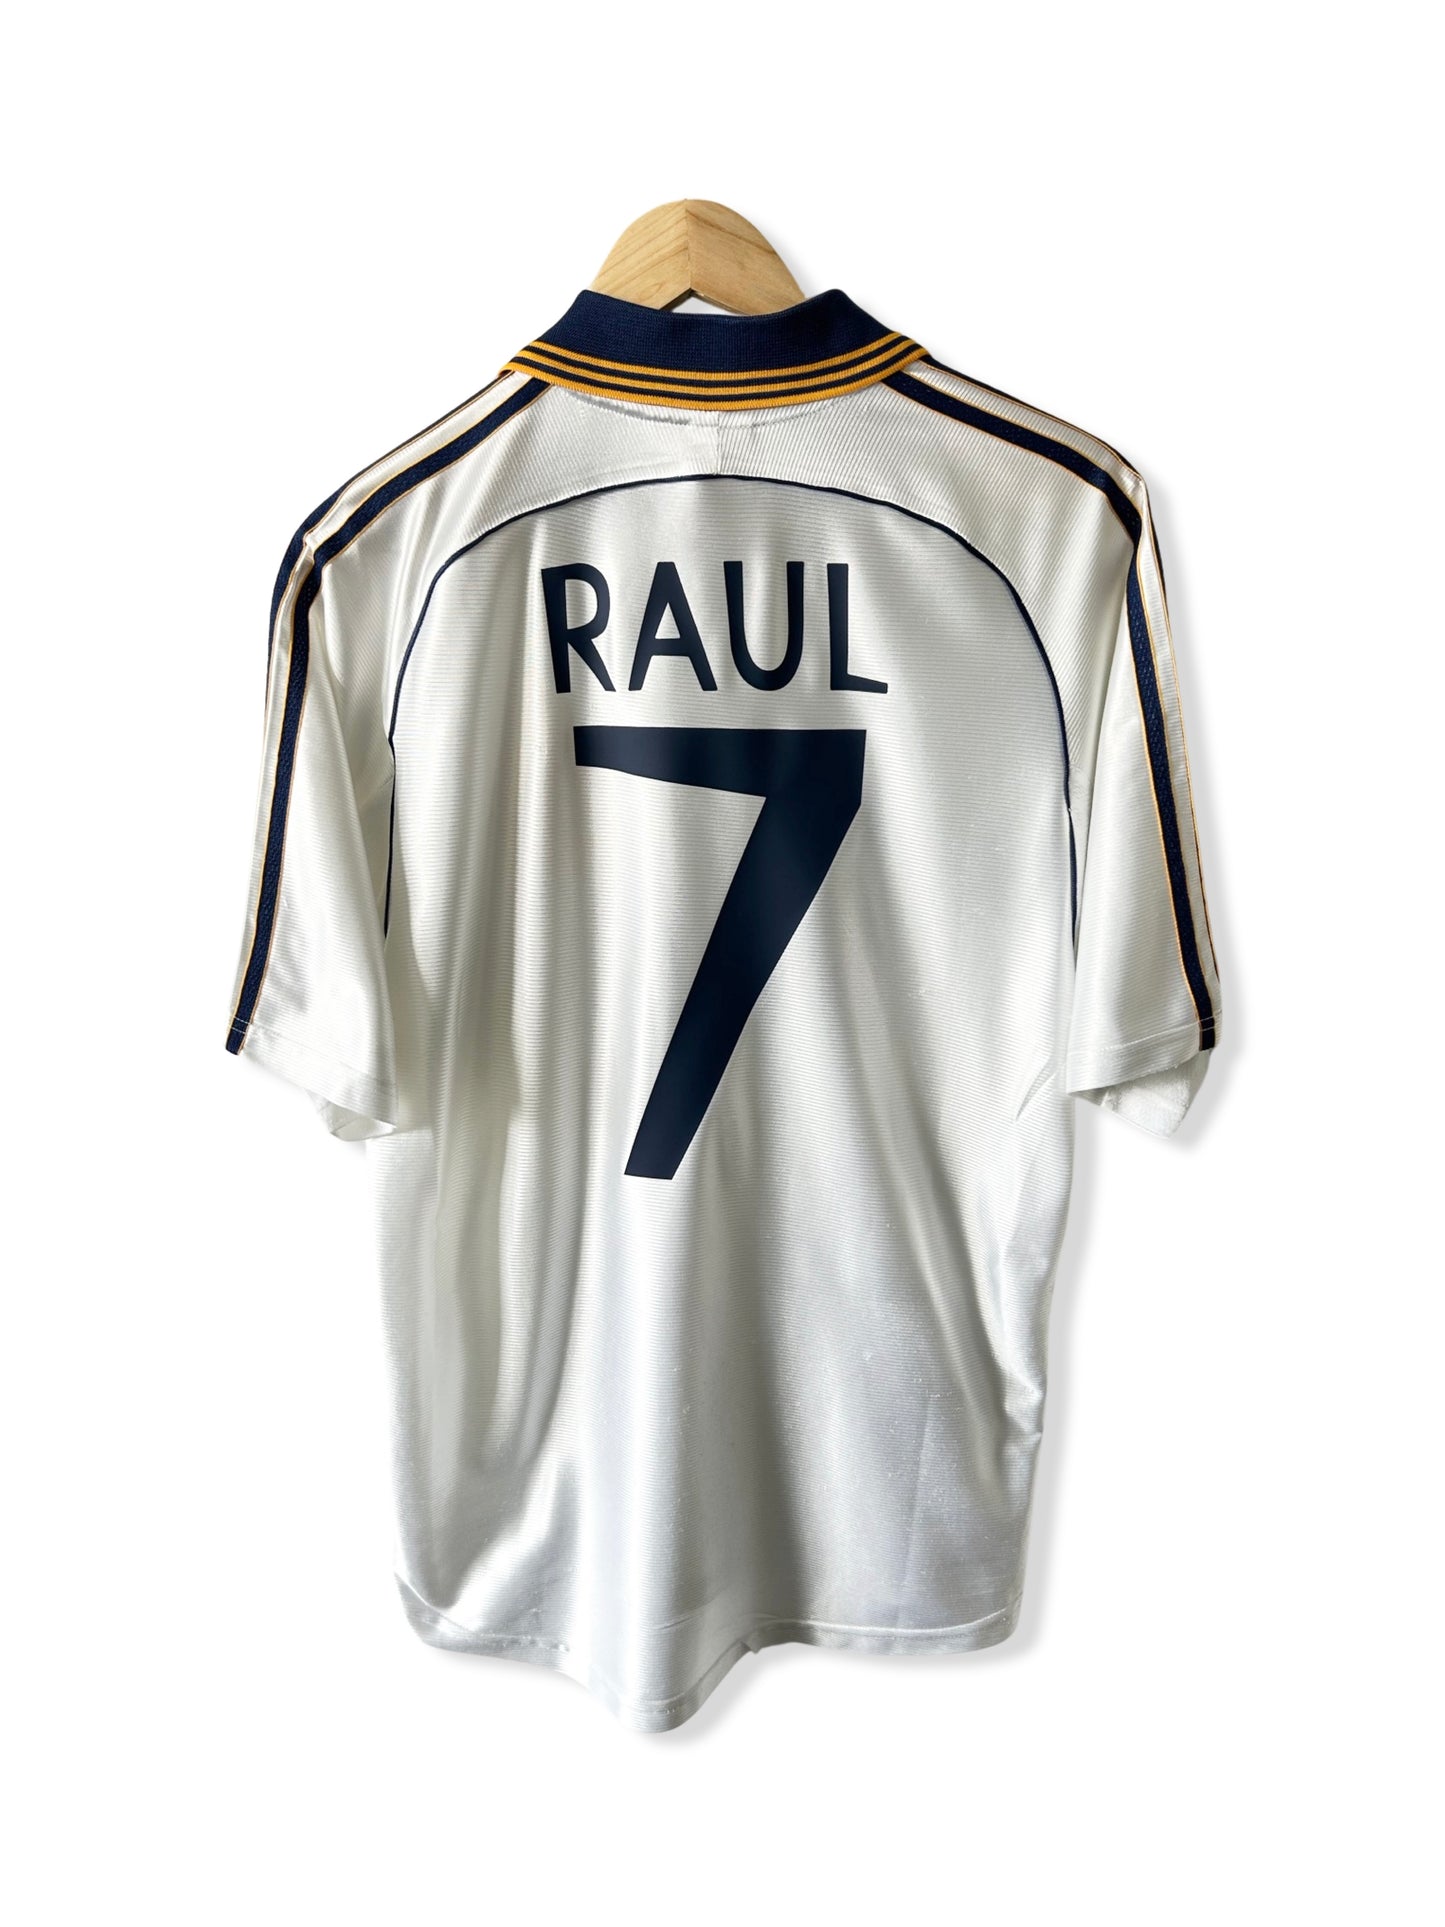 Real Madrid CF 1998-2000 Home Shirt, #7 Raul - L